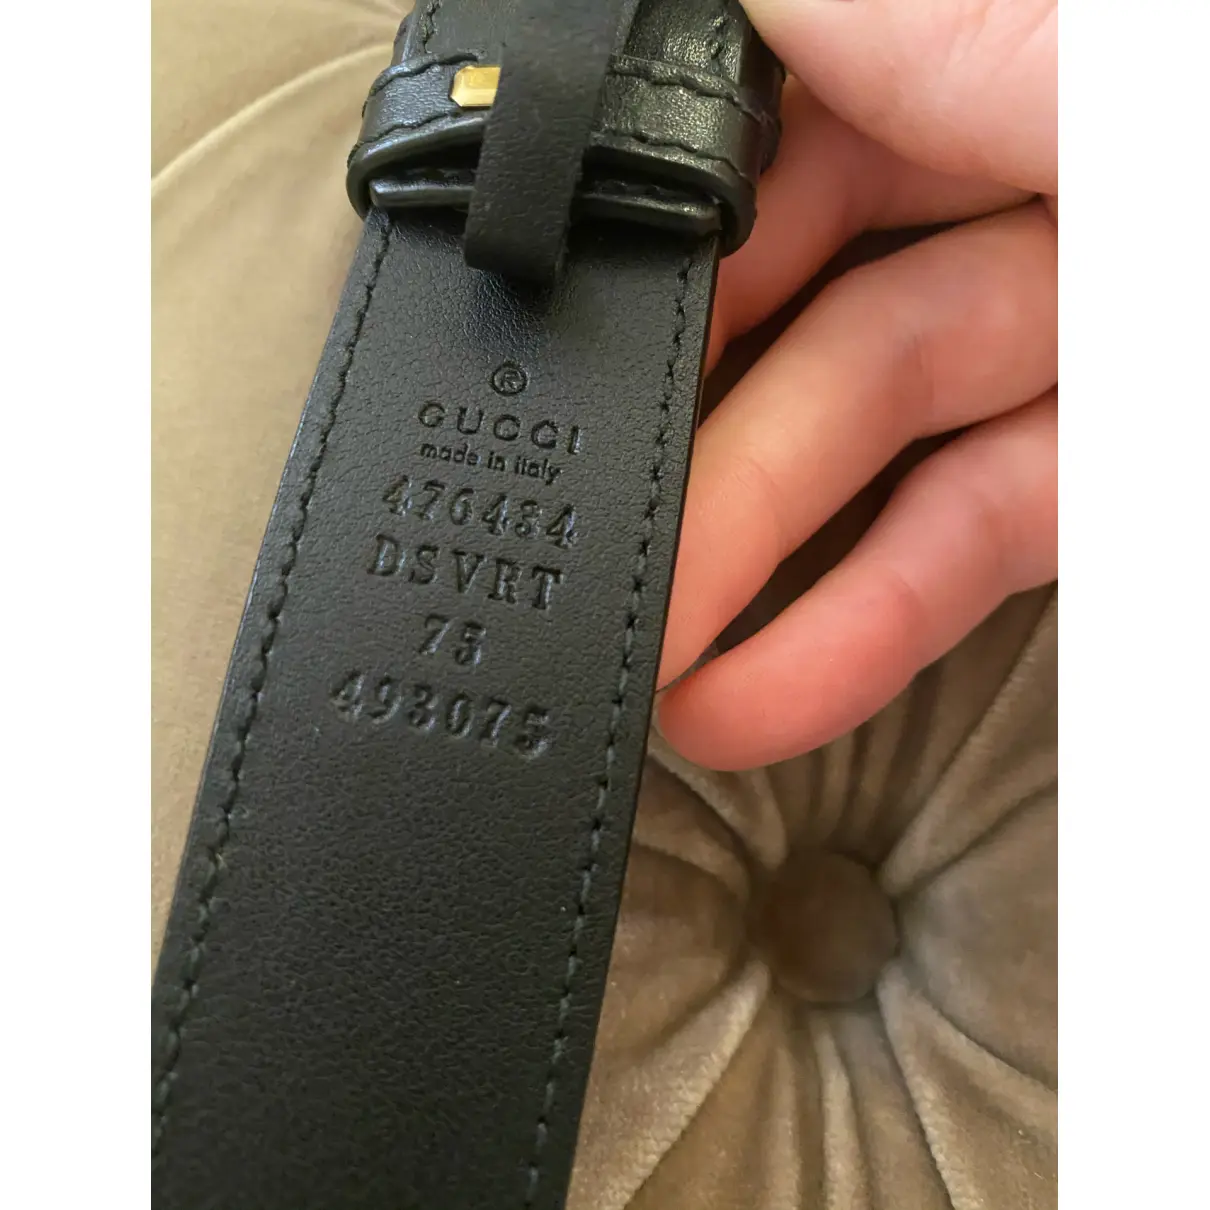 GG Marmont Oval leather handbag Gucci